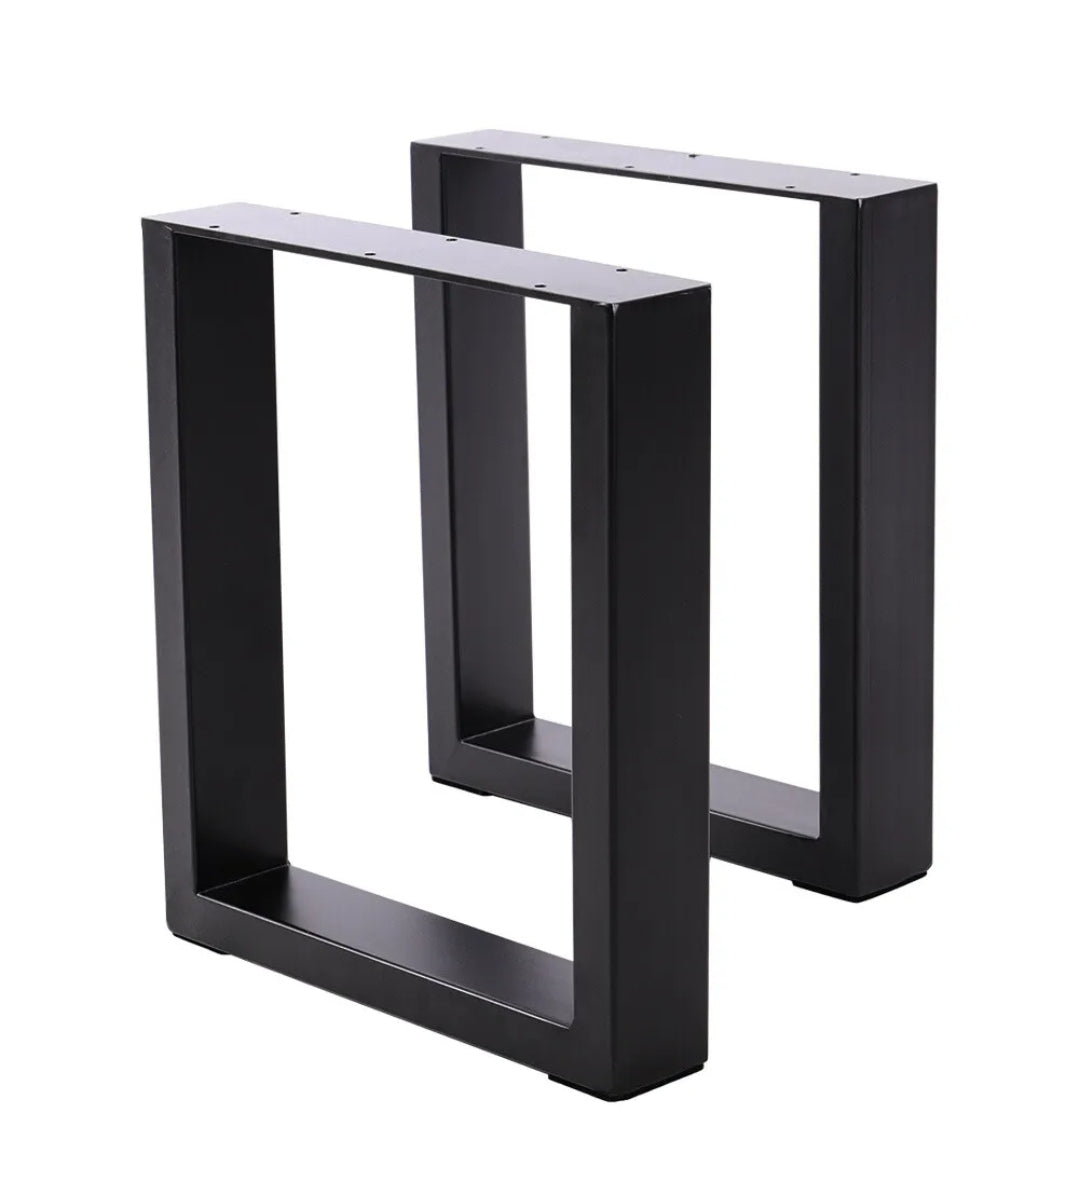 Square shape bar/table/bench legs